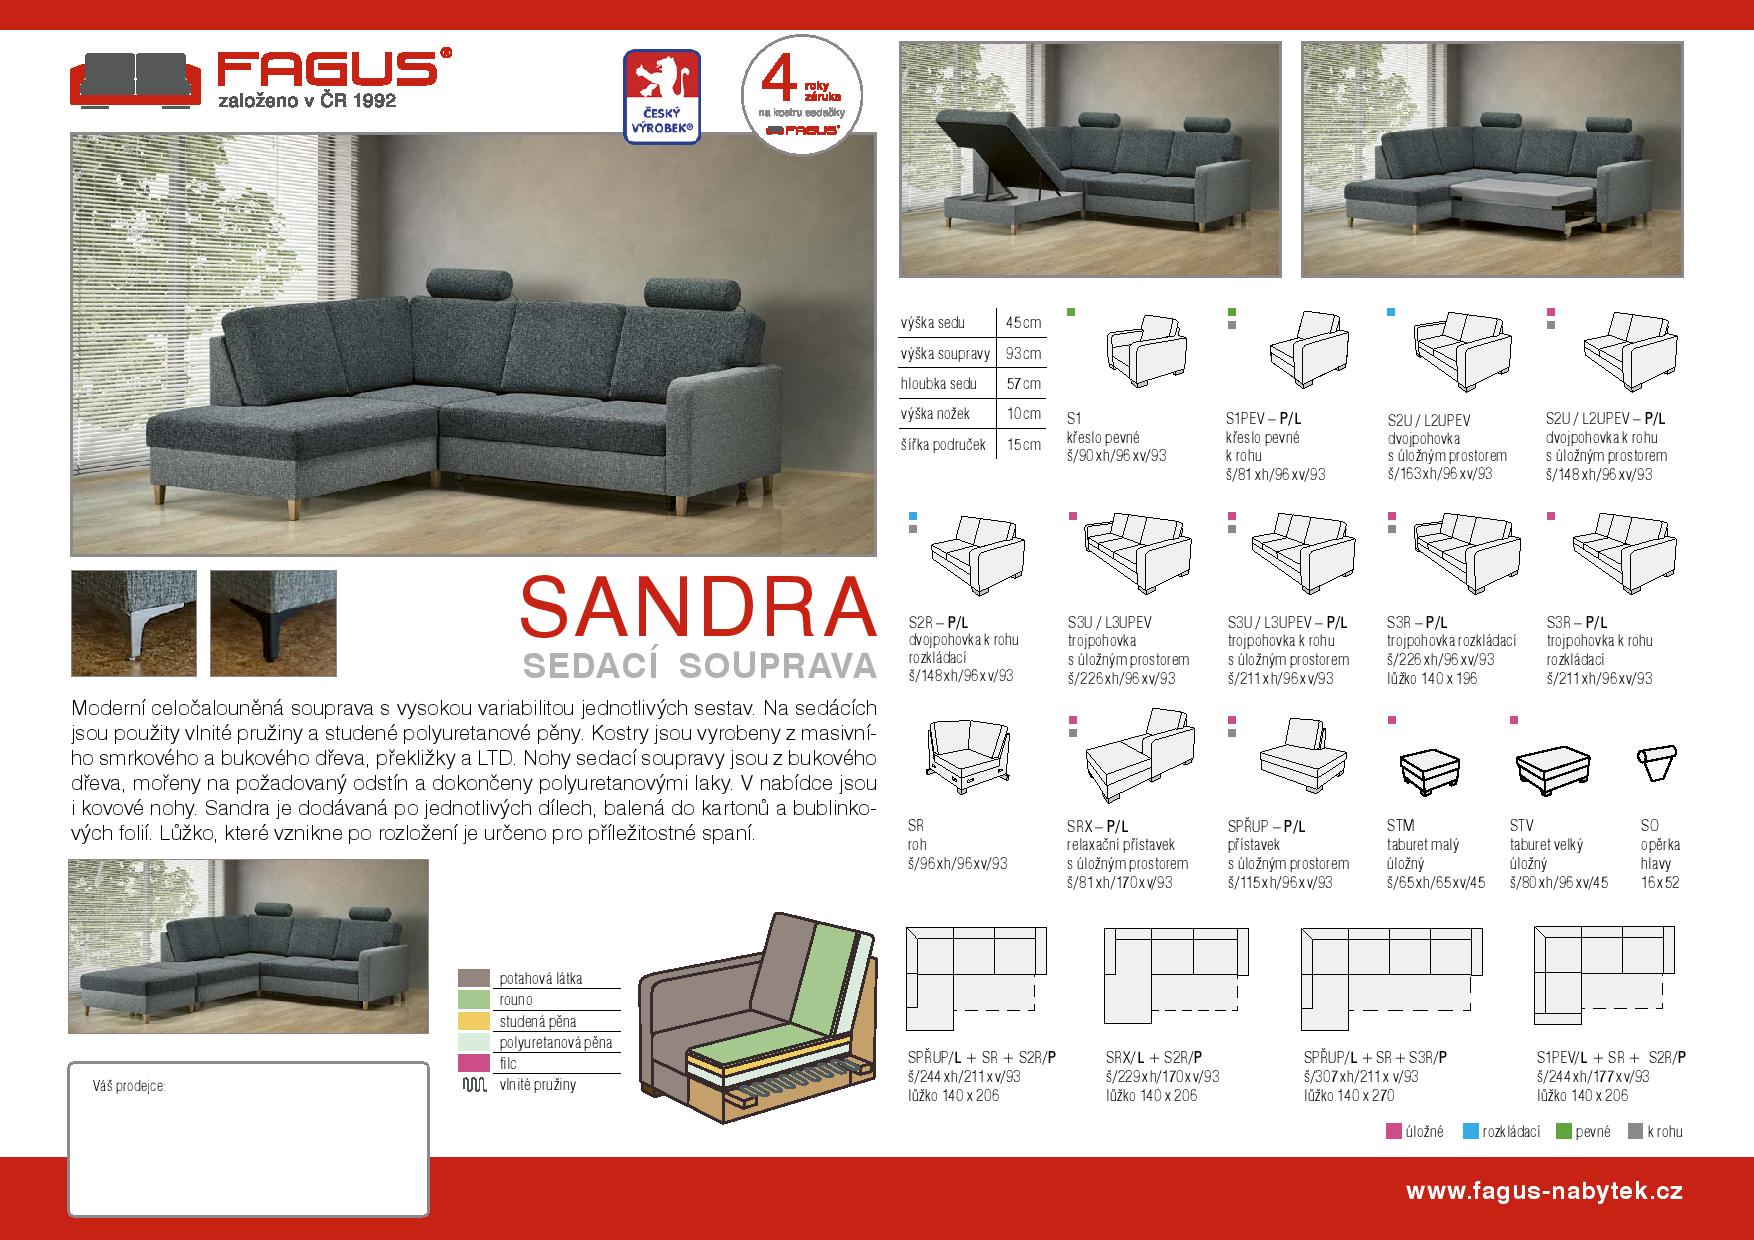 sandra-nahled2-page-001